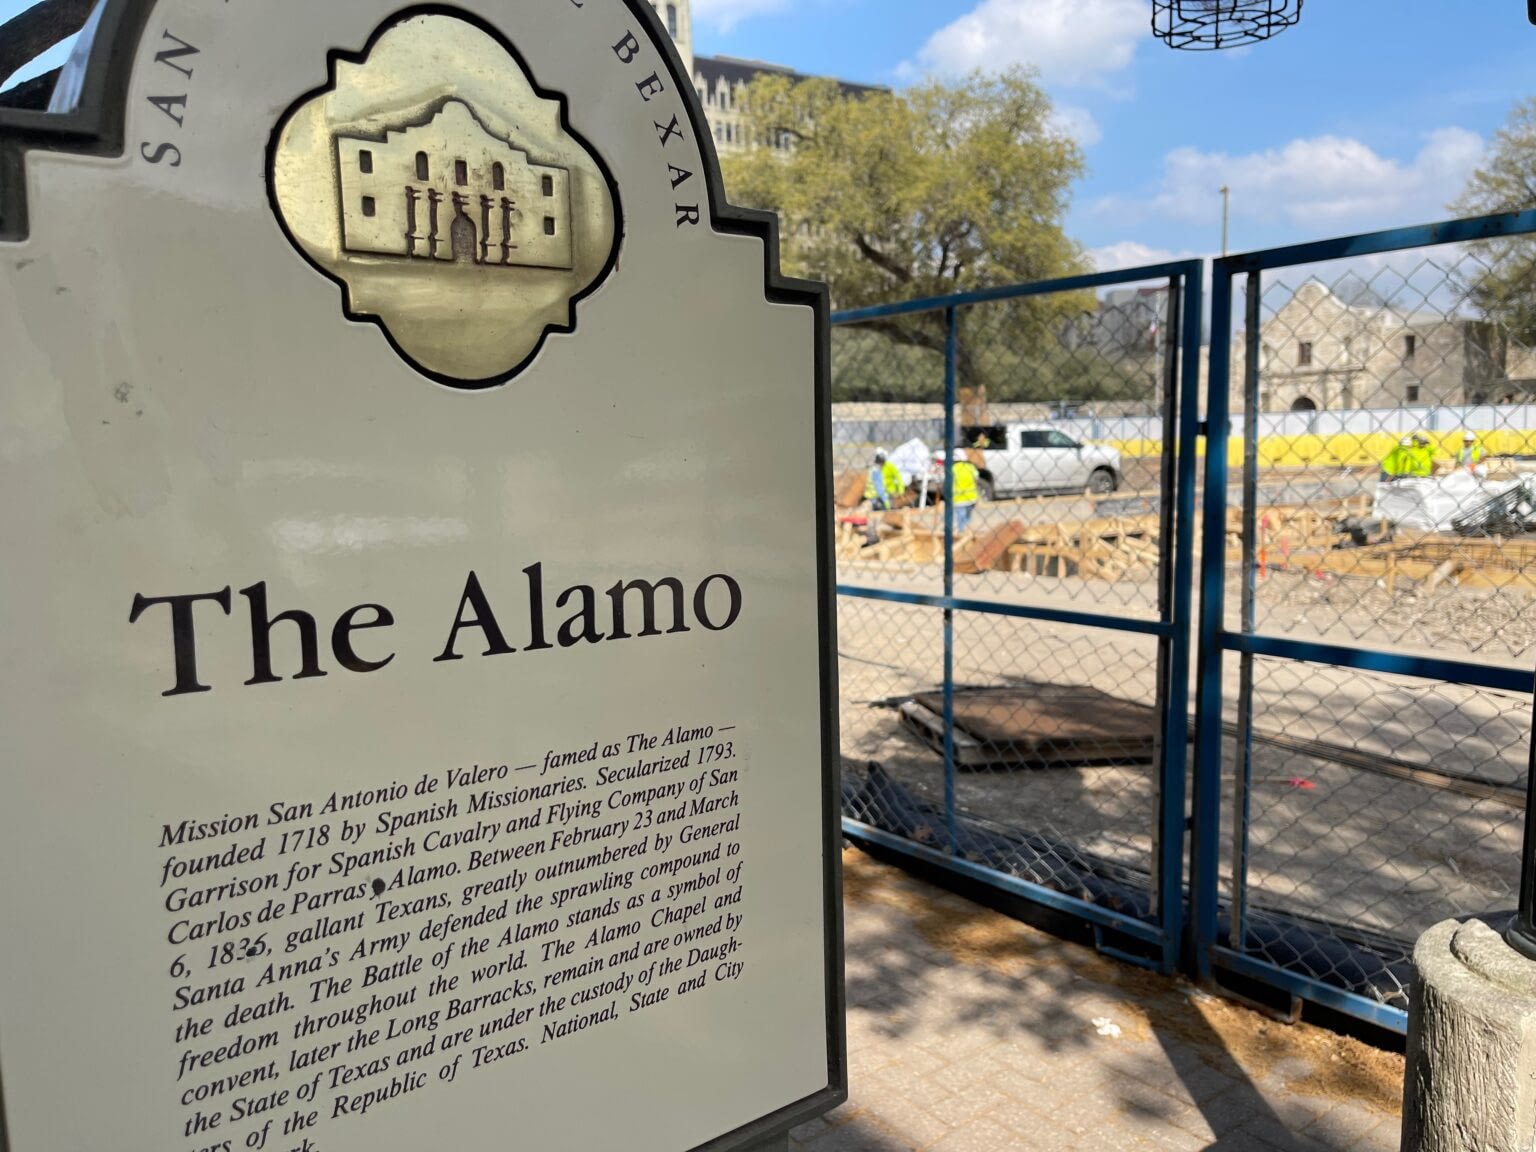 A new park is being built near the Alamo Church in San Antonio